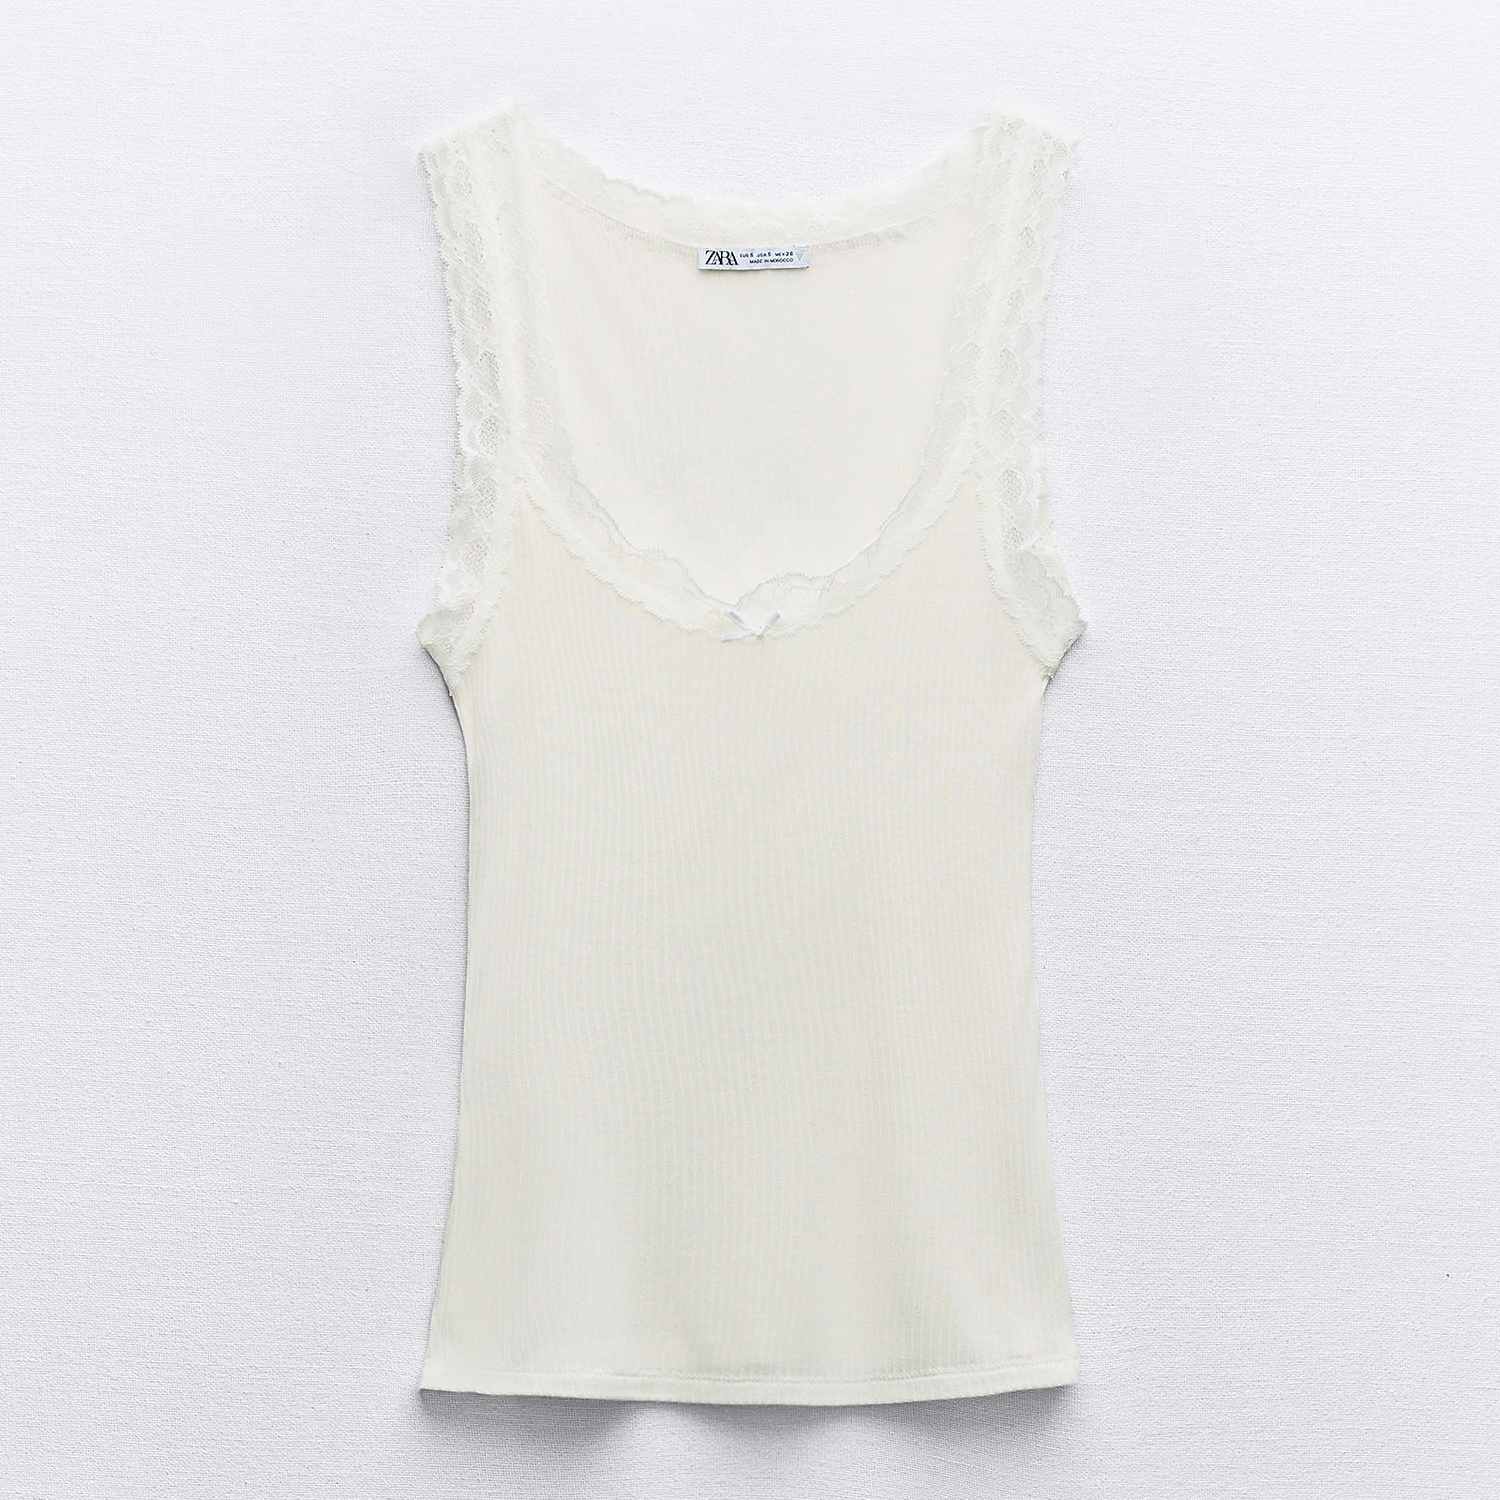 Топ Zara Modal Blend With Lace, белый топ из модала с вырезом на спине gap синий